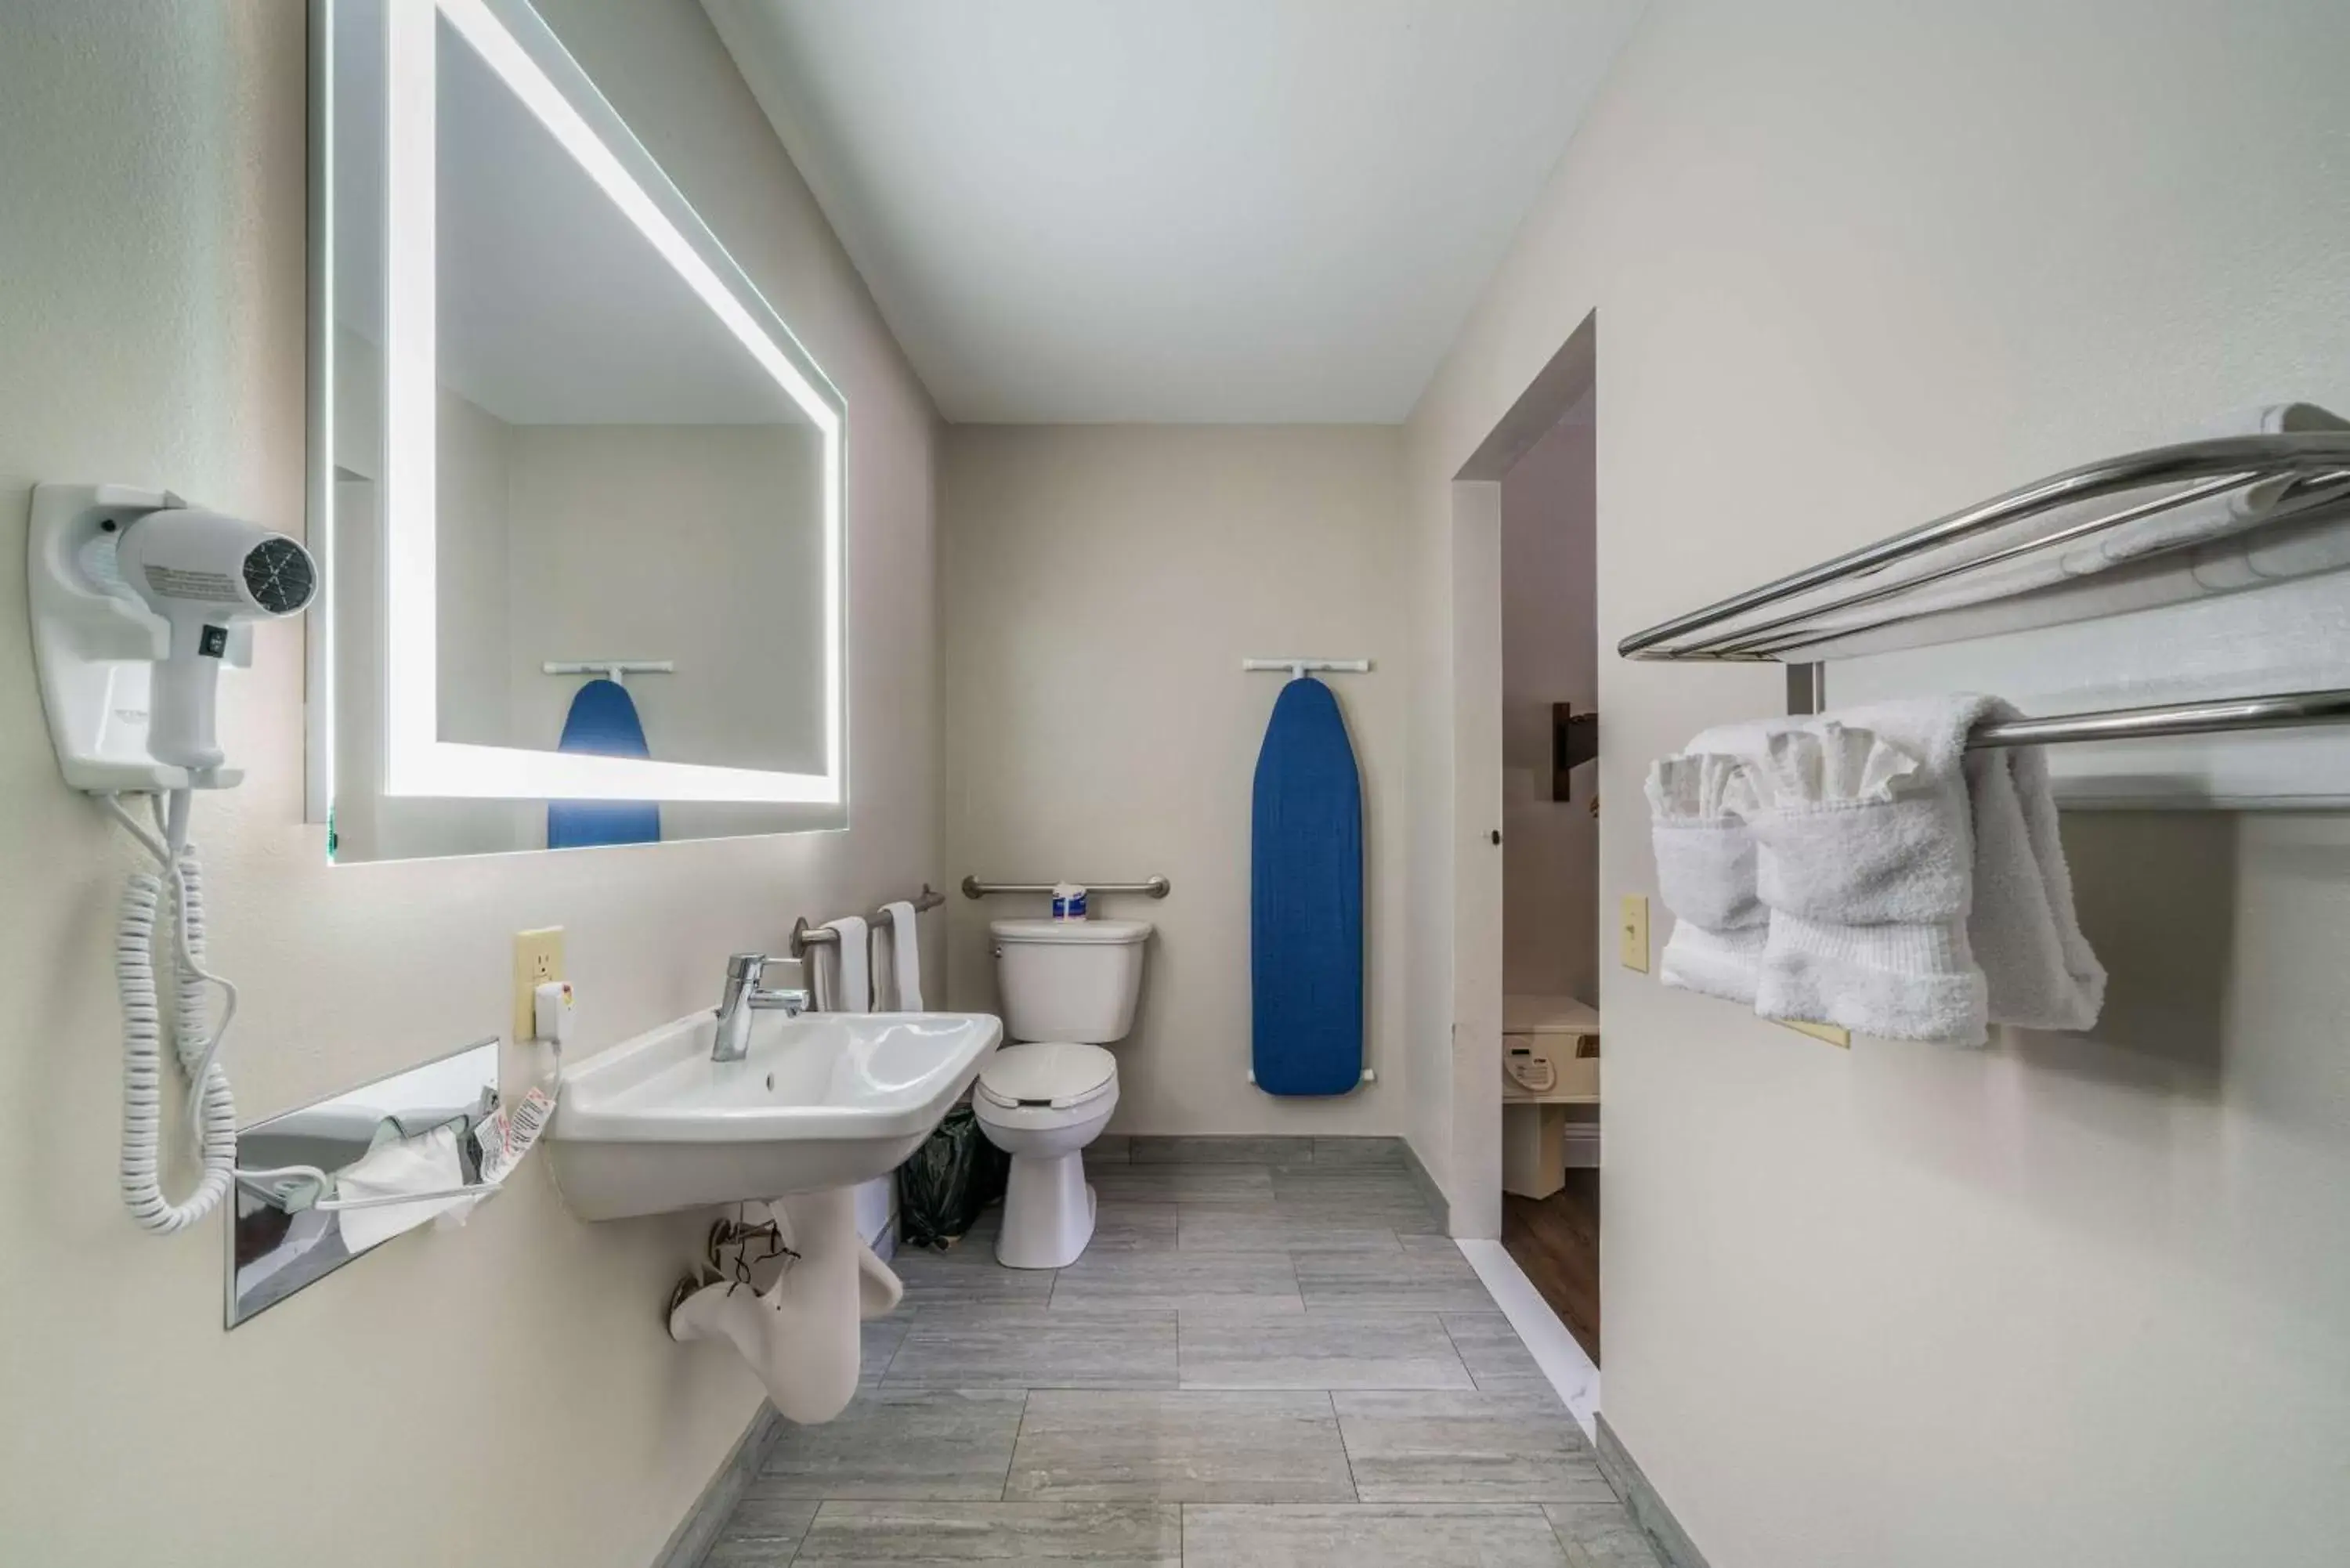 Photo of the whole room, Bathroom in Best Western Inn of Jasper